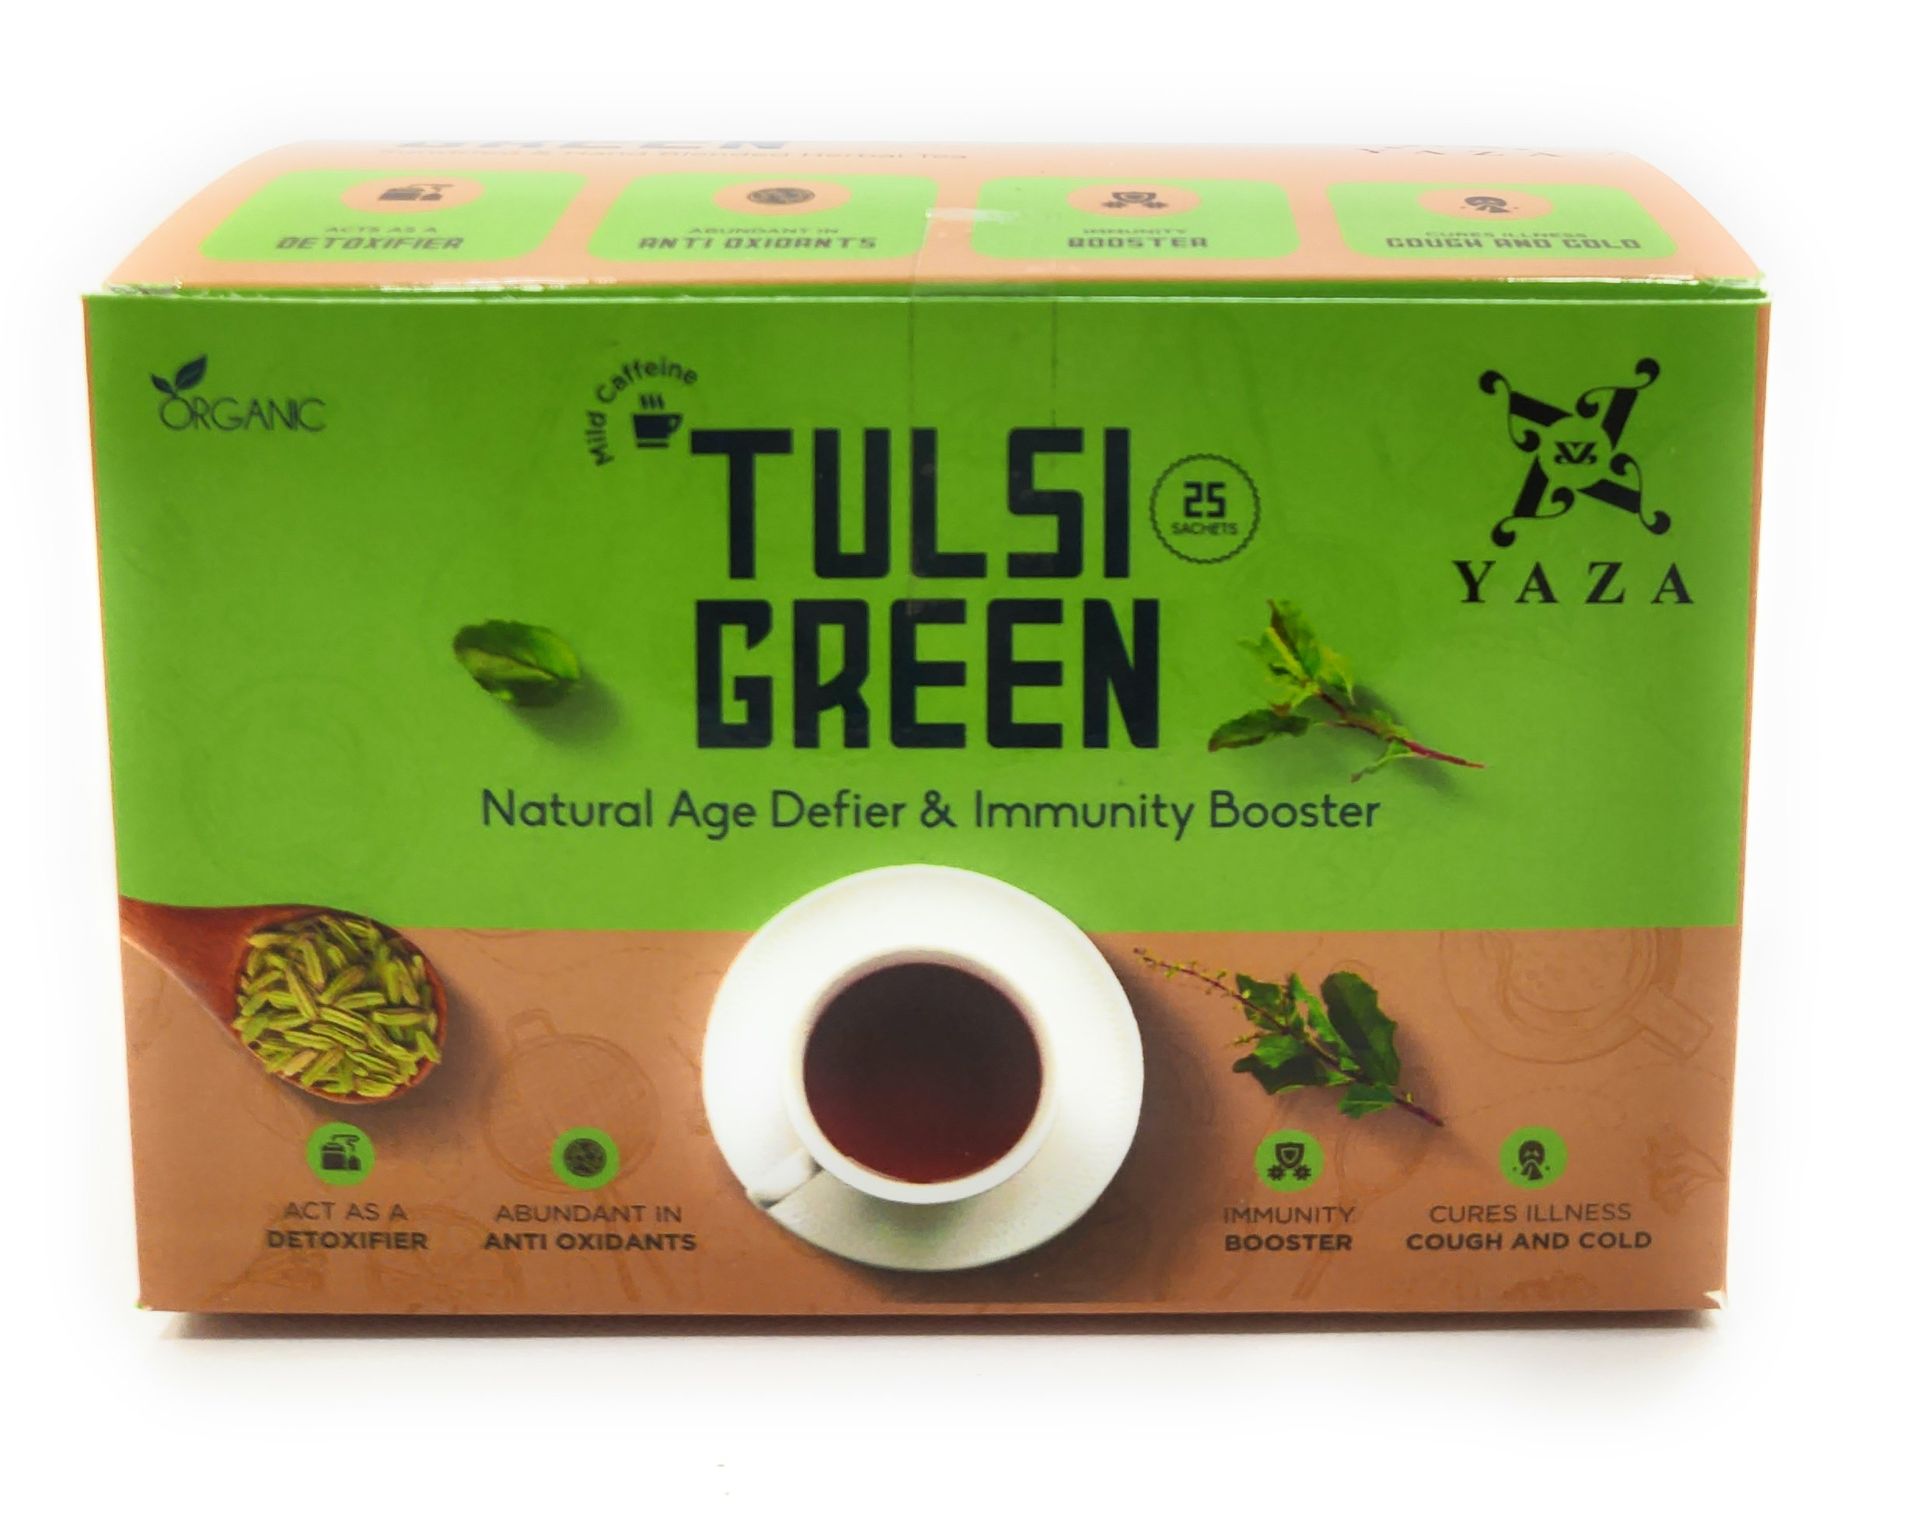 Yaza Tulsi Green Tea - Natural Age Defier & Immunity Booster - loose tea sachets (100grams) - hfnl!fe